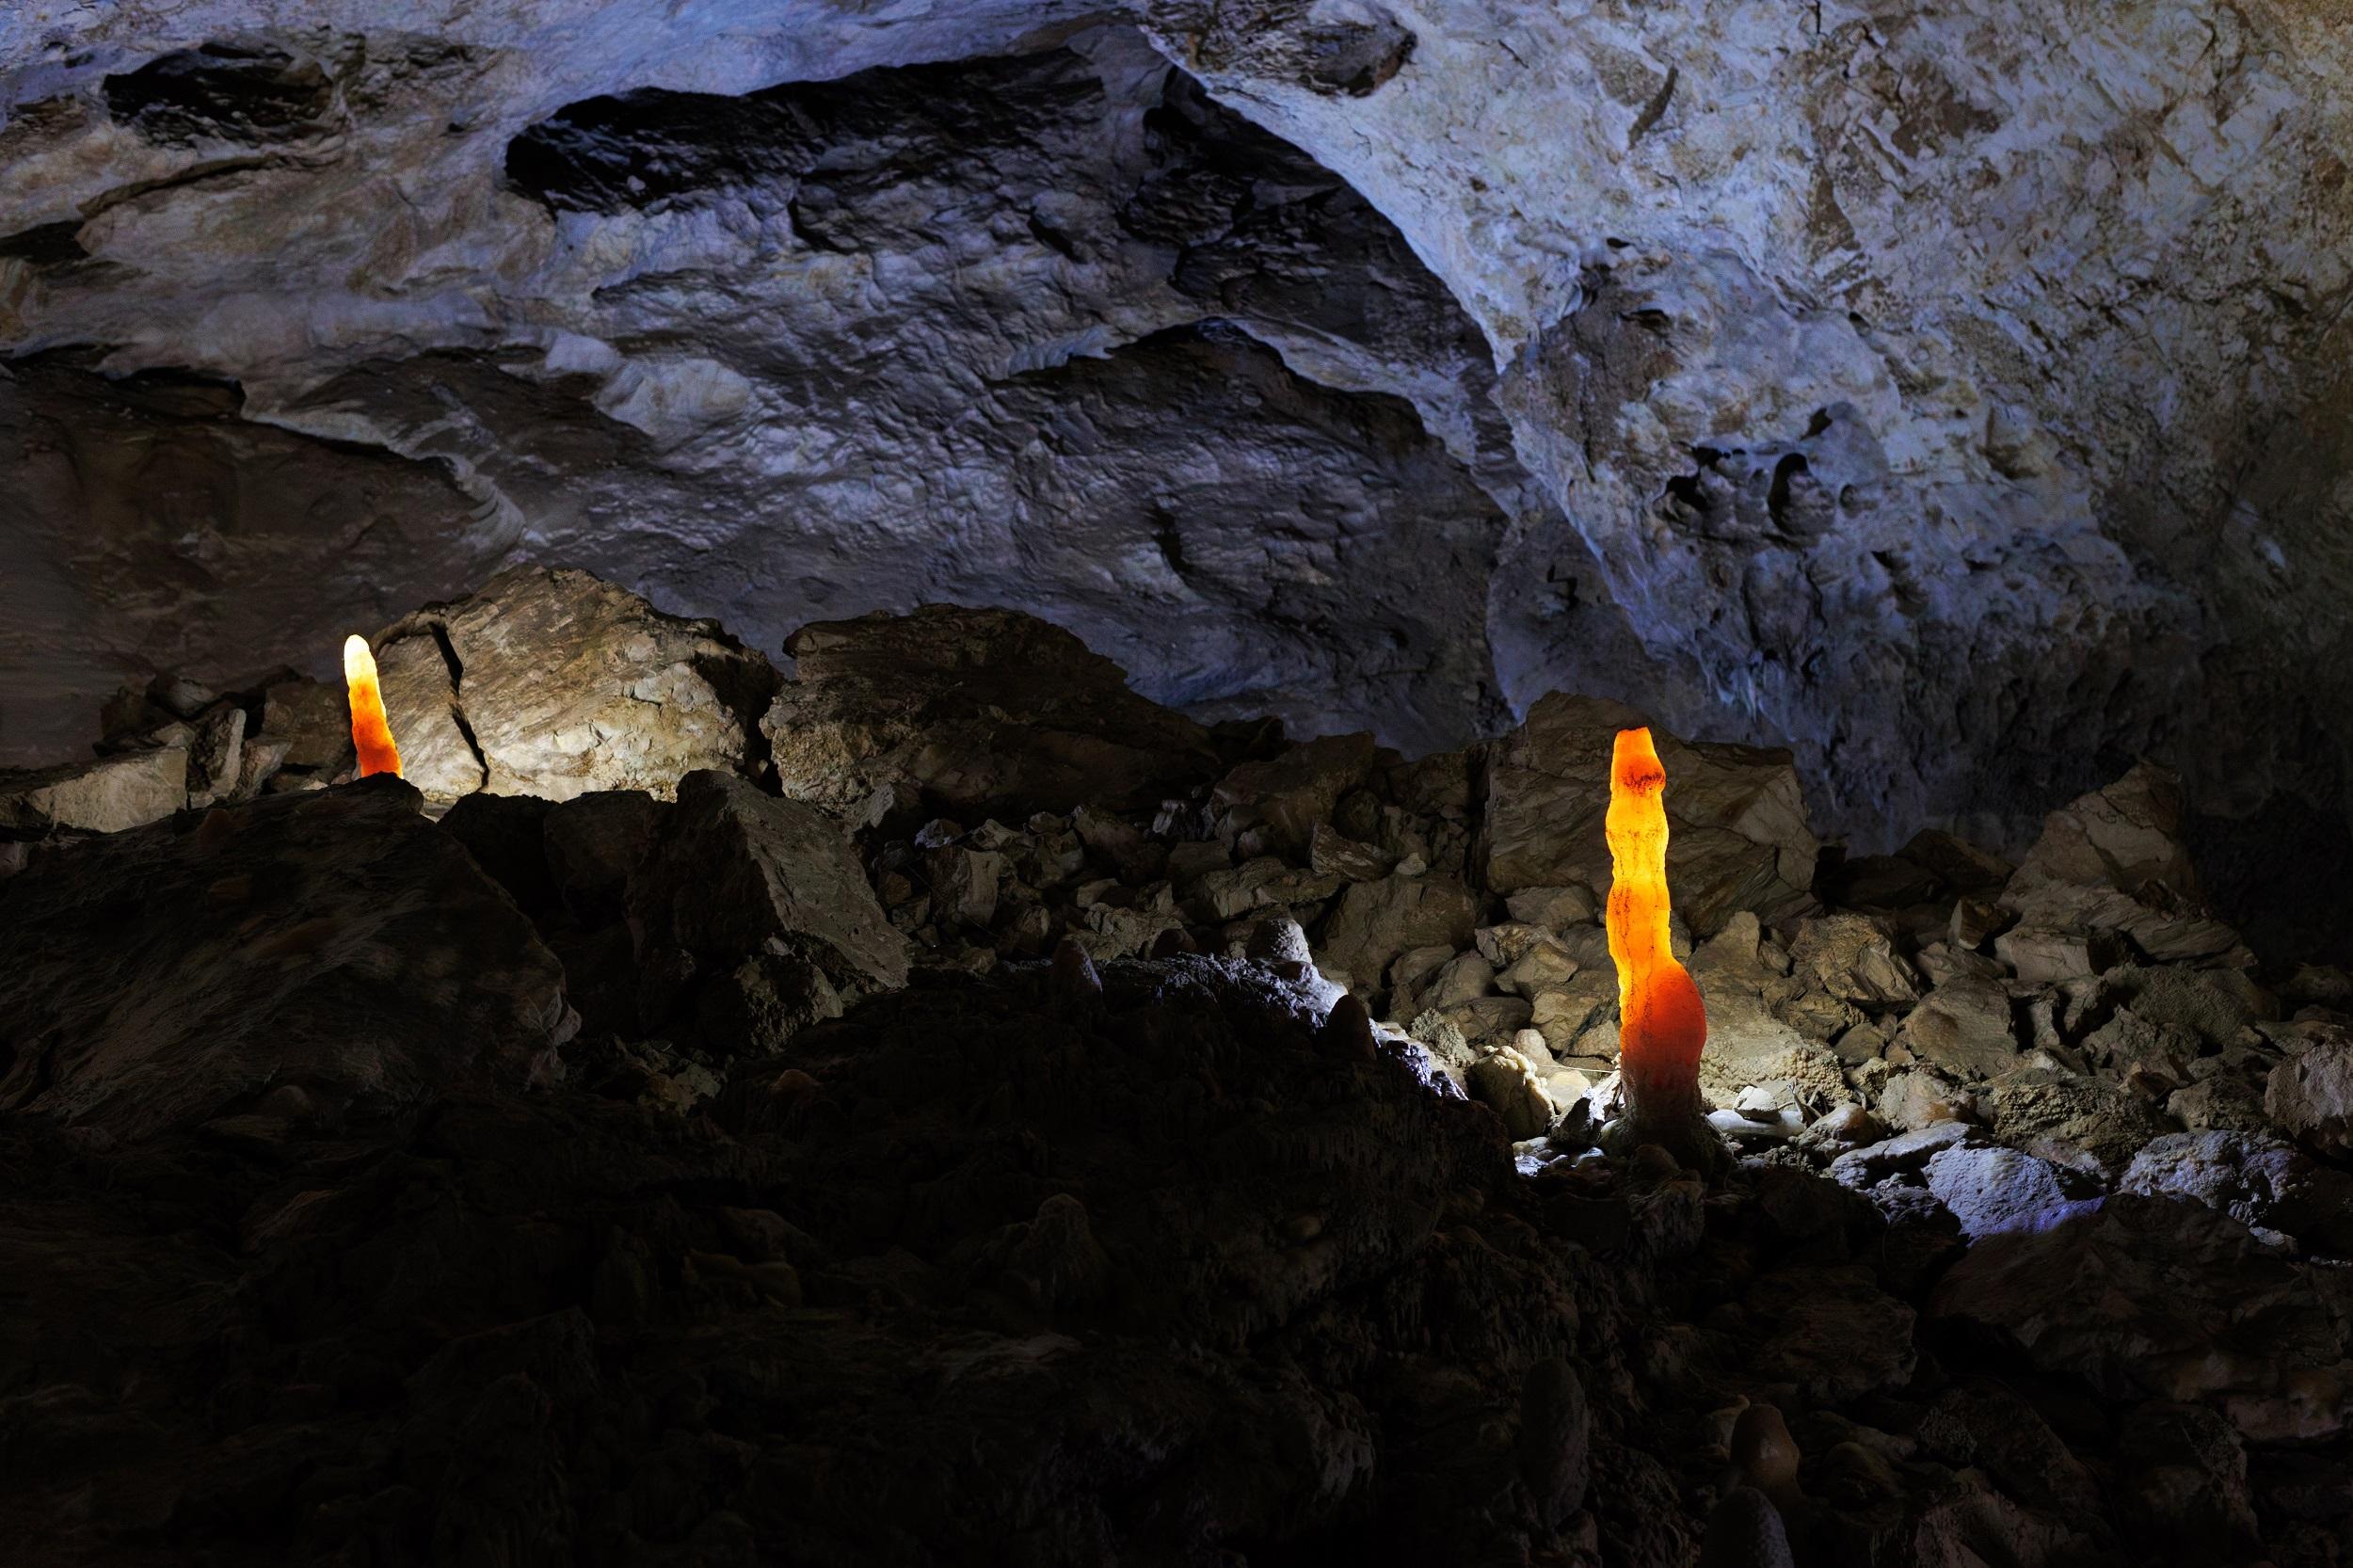 Grotte avec stalactites et stalagmites